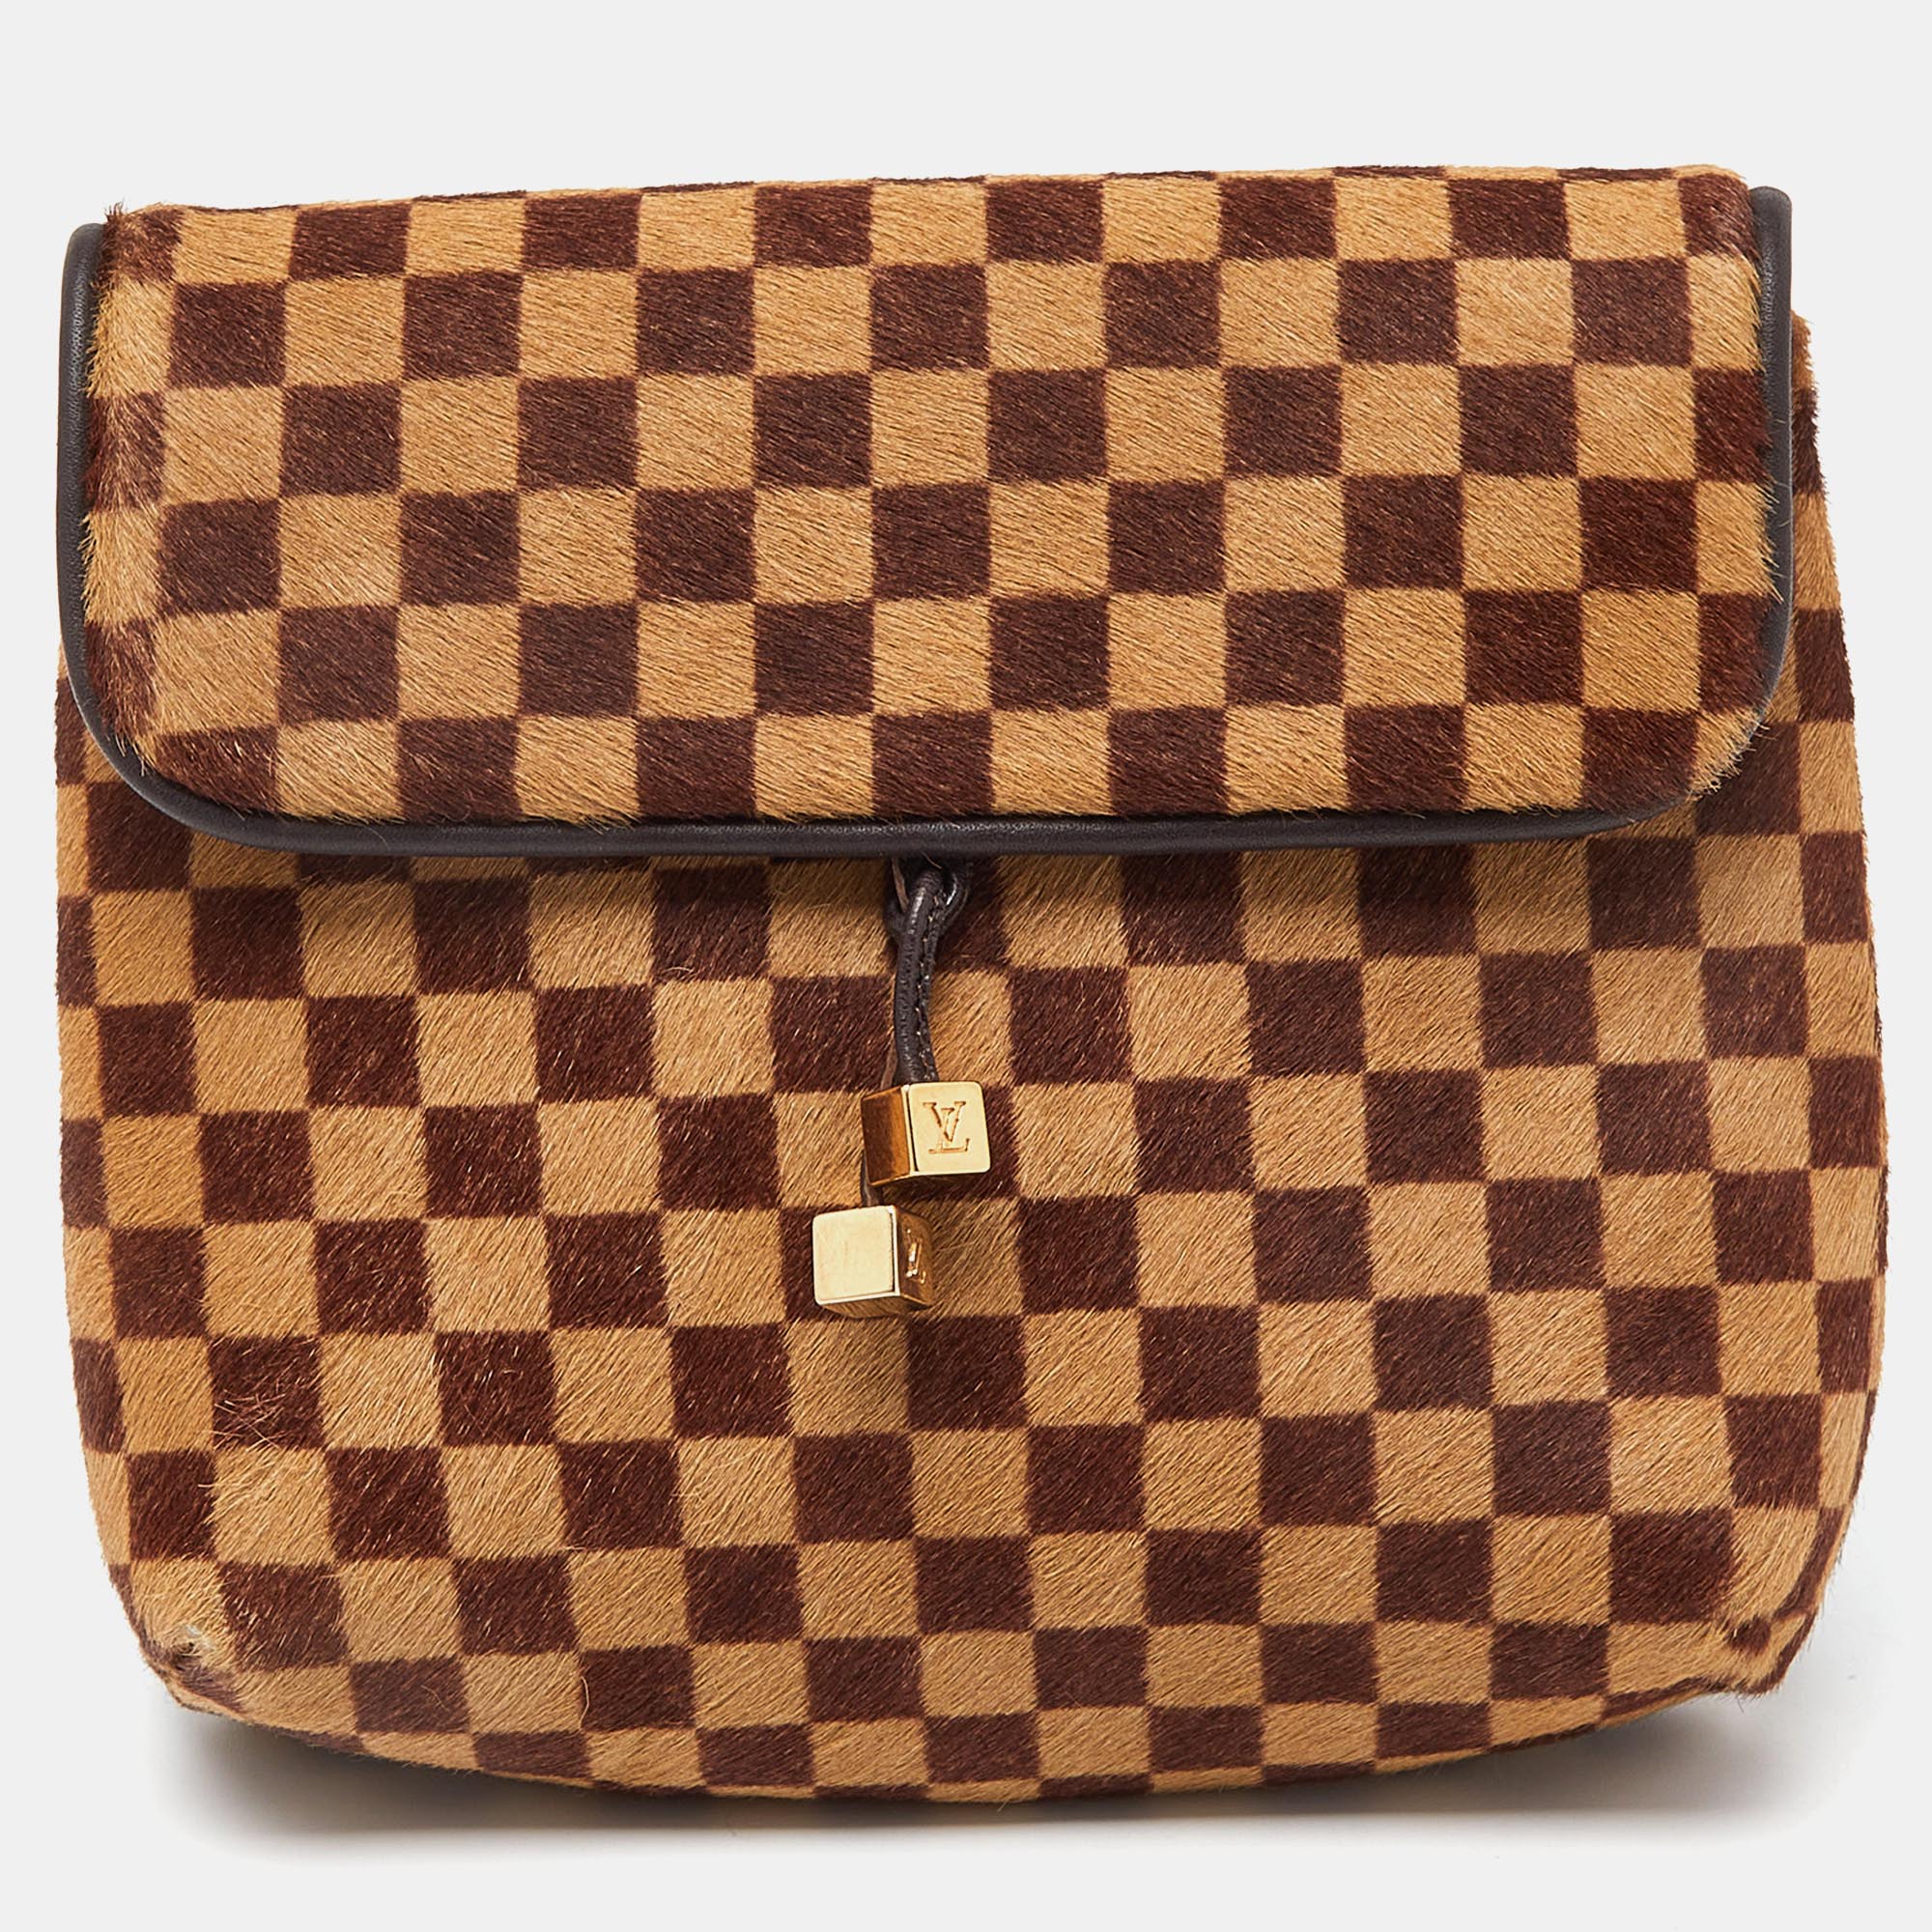 

Louis Vuitton Damier Ebene Calf Hair Limited Edition Sauvage Gazelle Bag, Brown